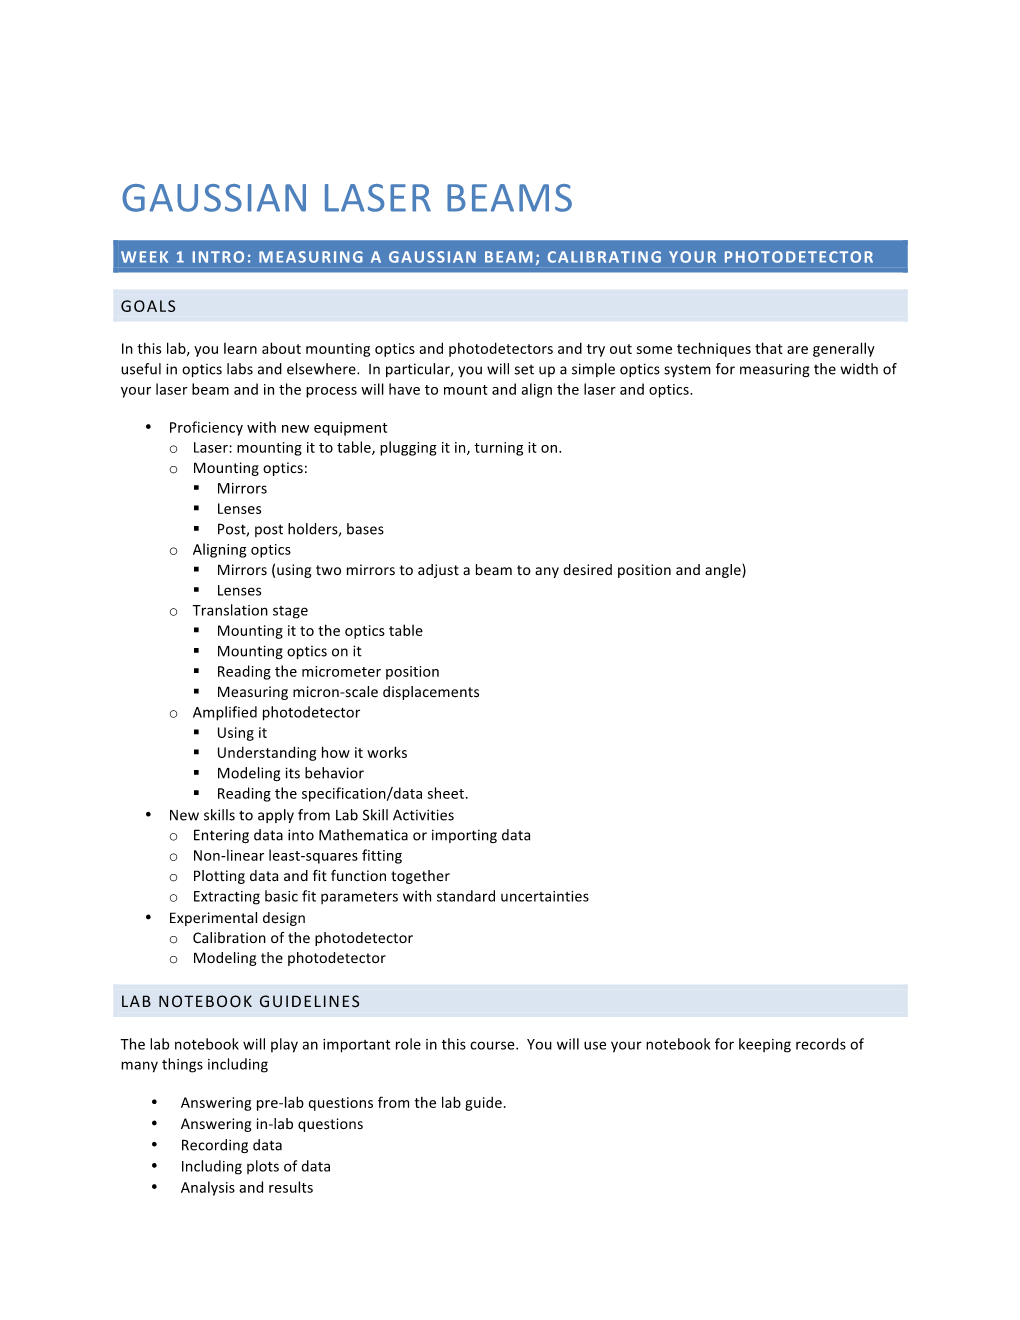 Gaussian Laser Beams